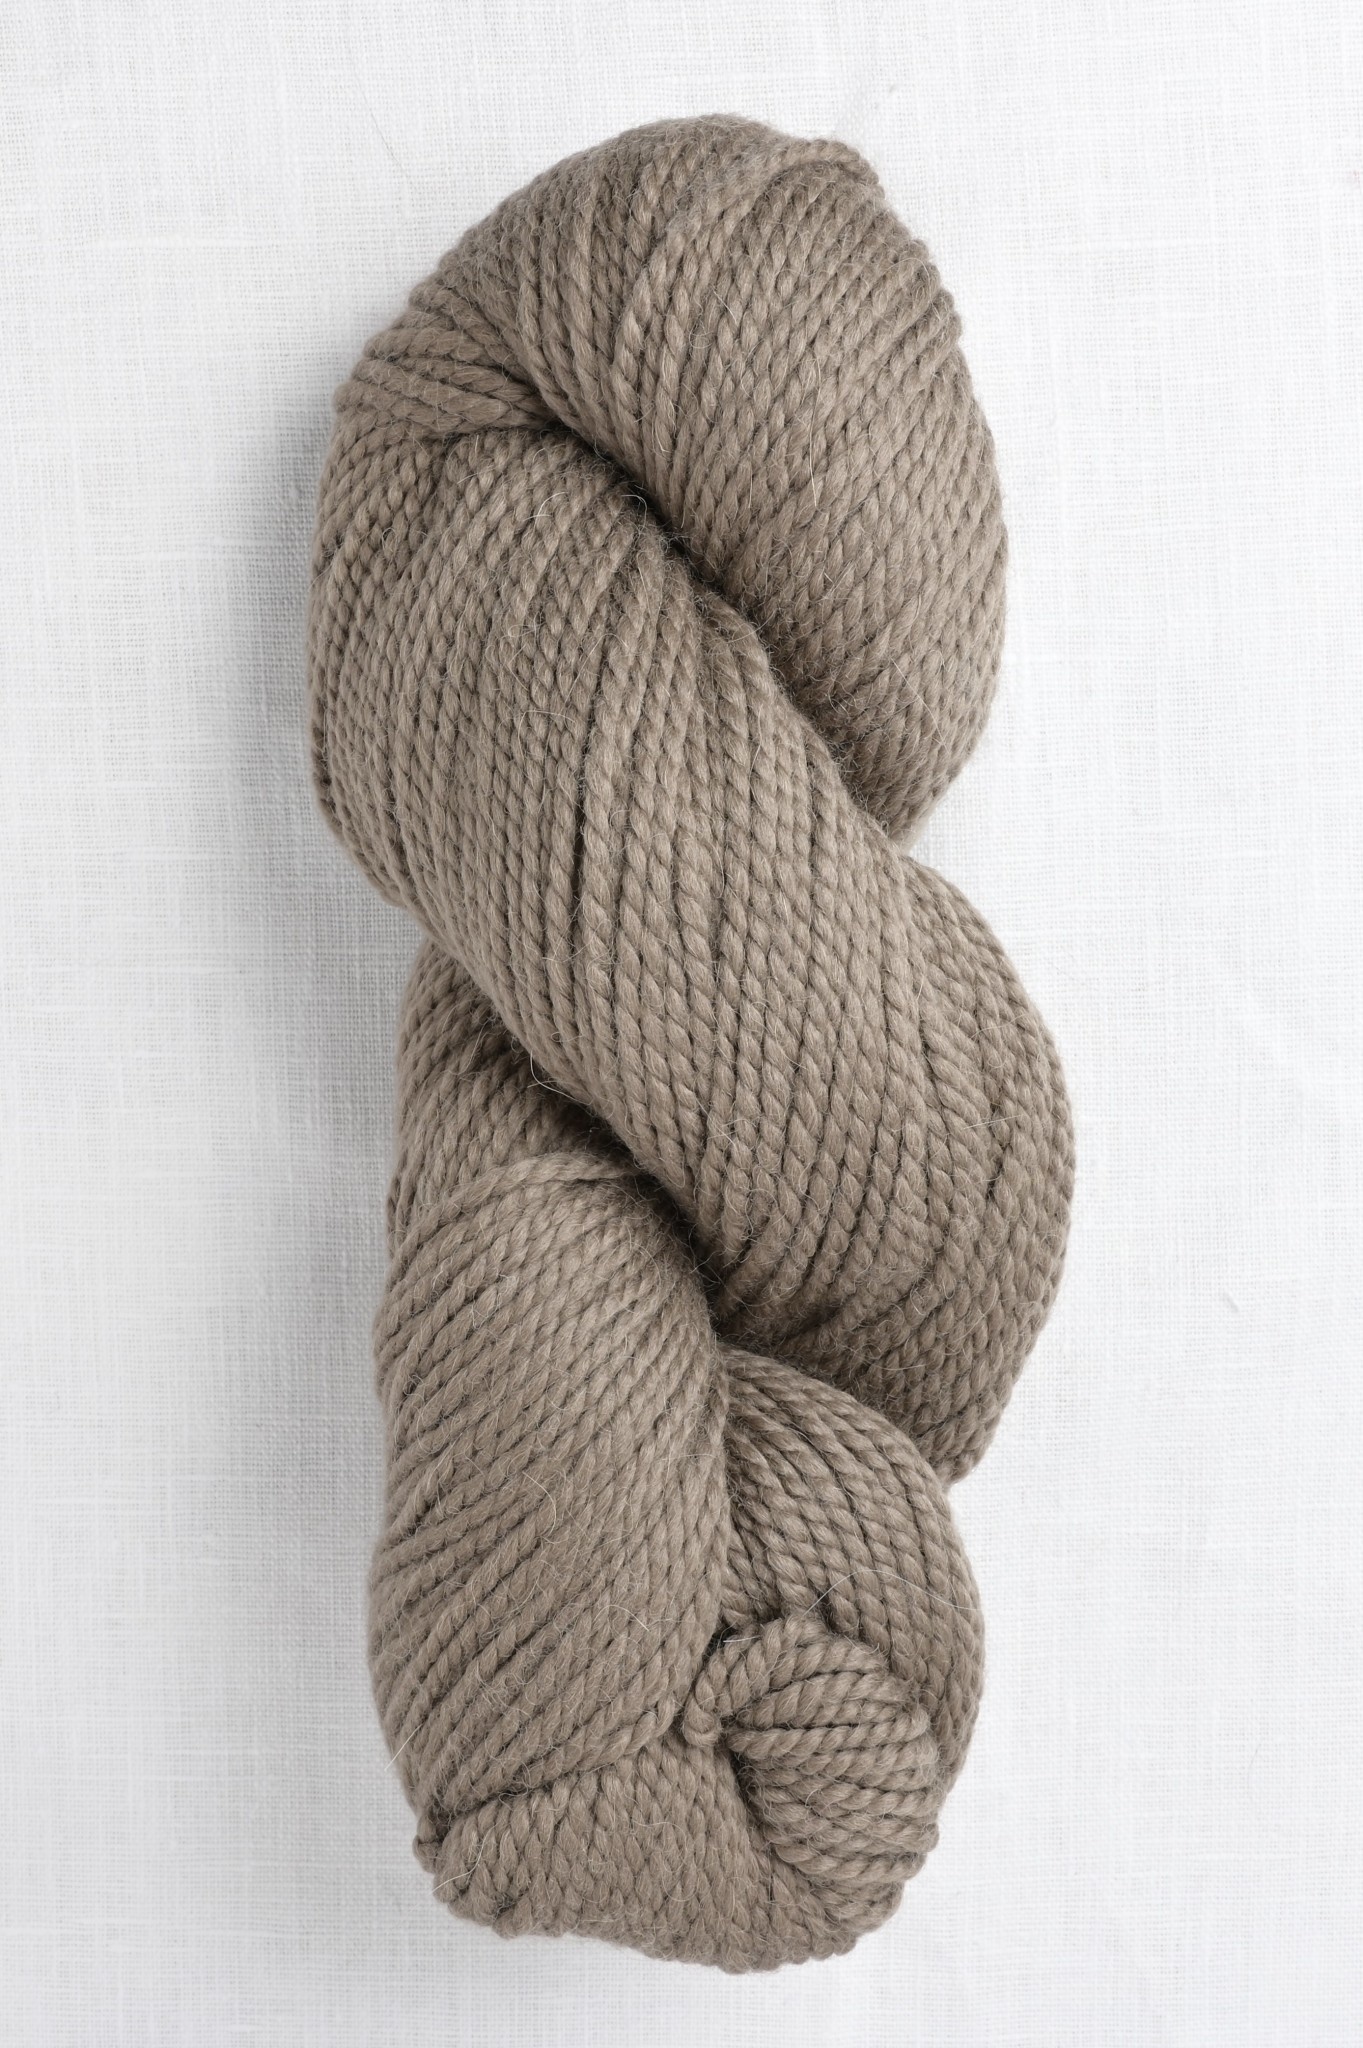 Blue Sky Fibers Extra 3527 Chestnut - Wool and Company Fine Yarn